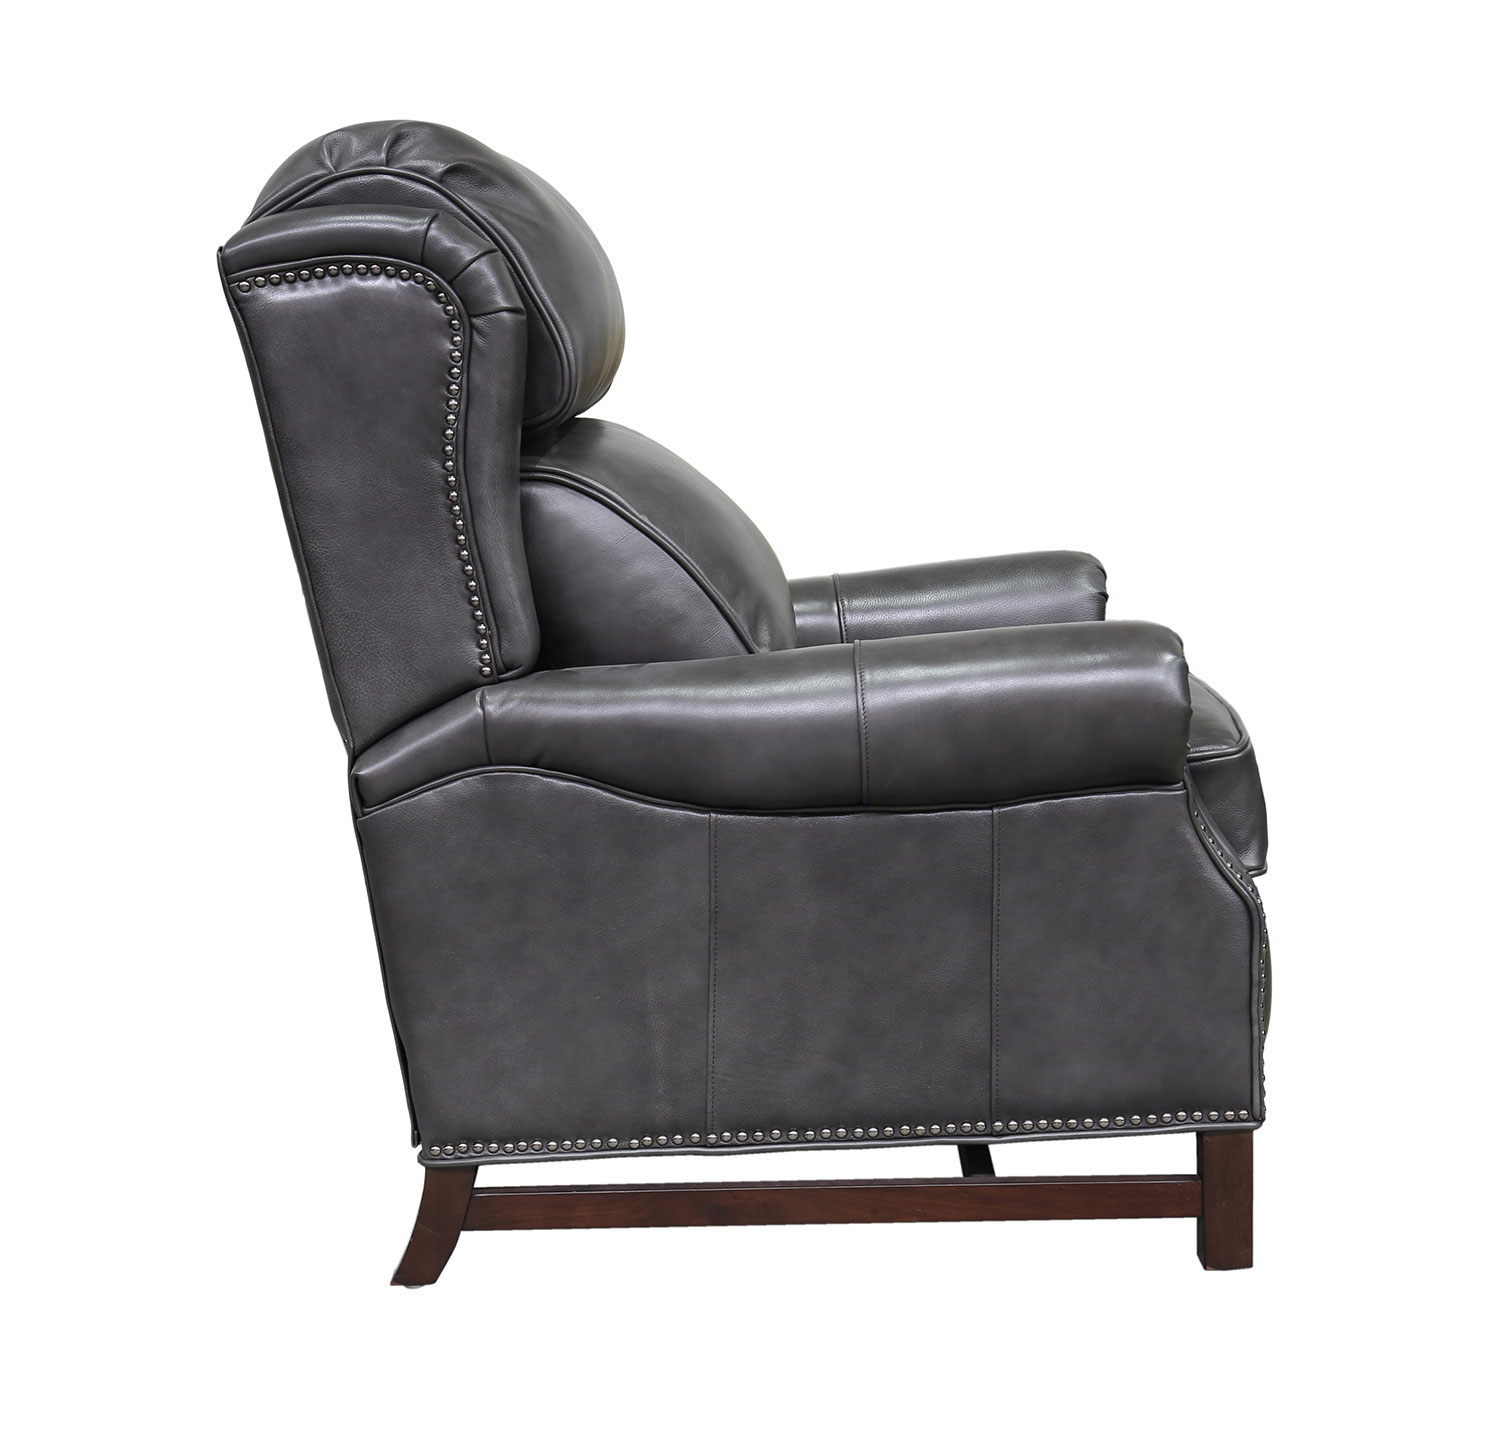 Barcalounger Thornfield Recliner Chair - Wrenn Gray/all leather